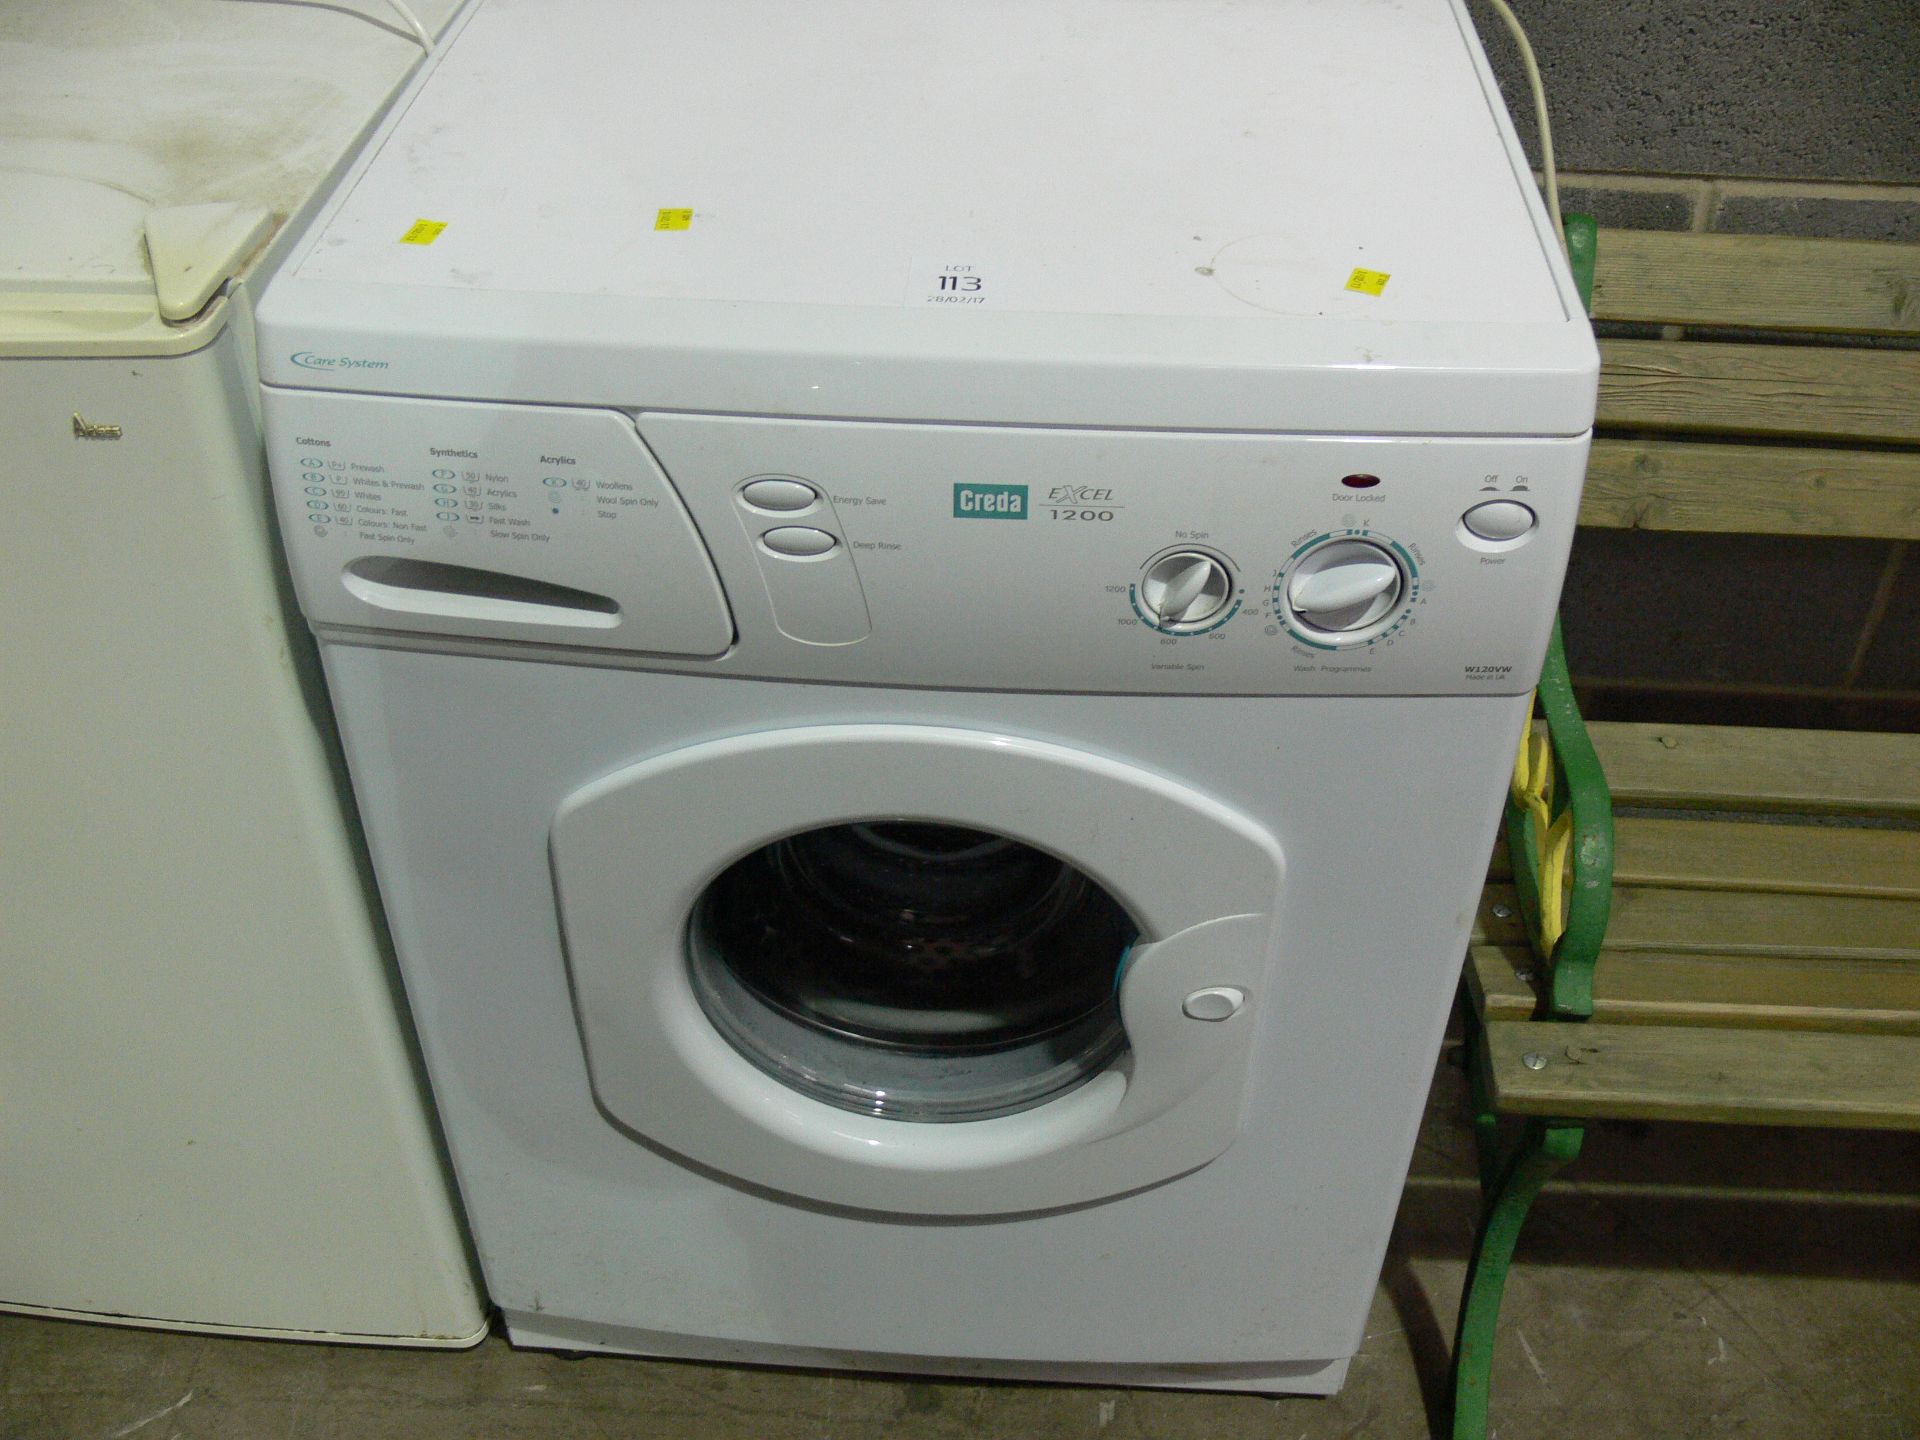 A Creda Excel 1200 washing machine